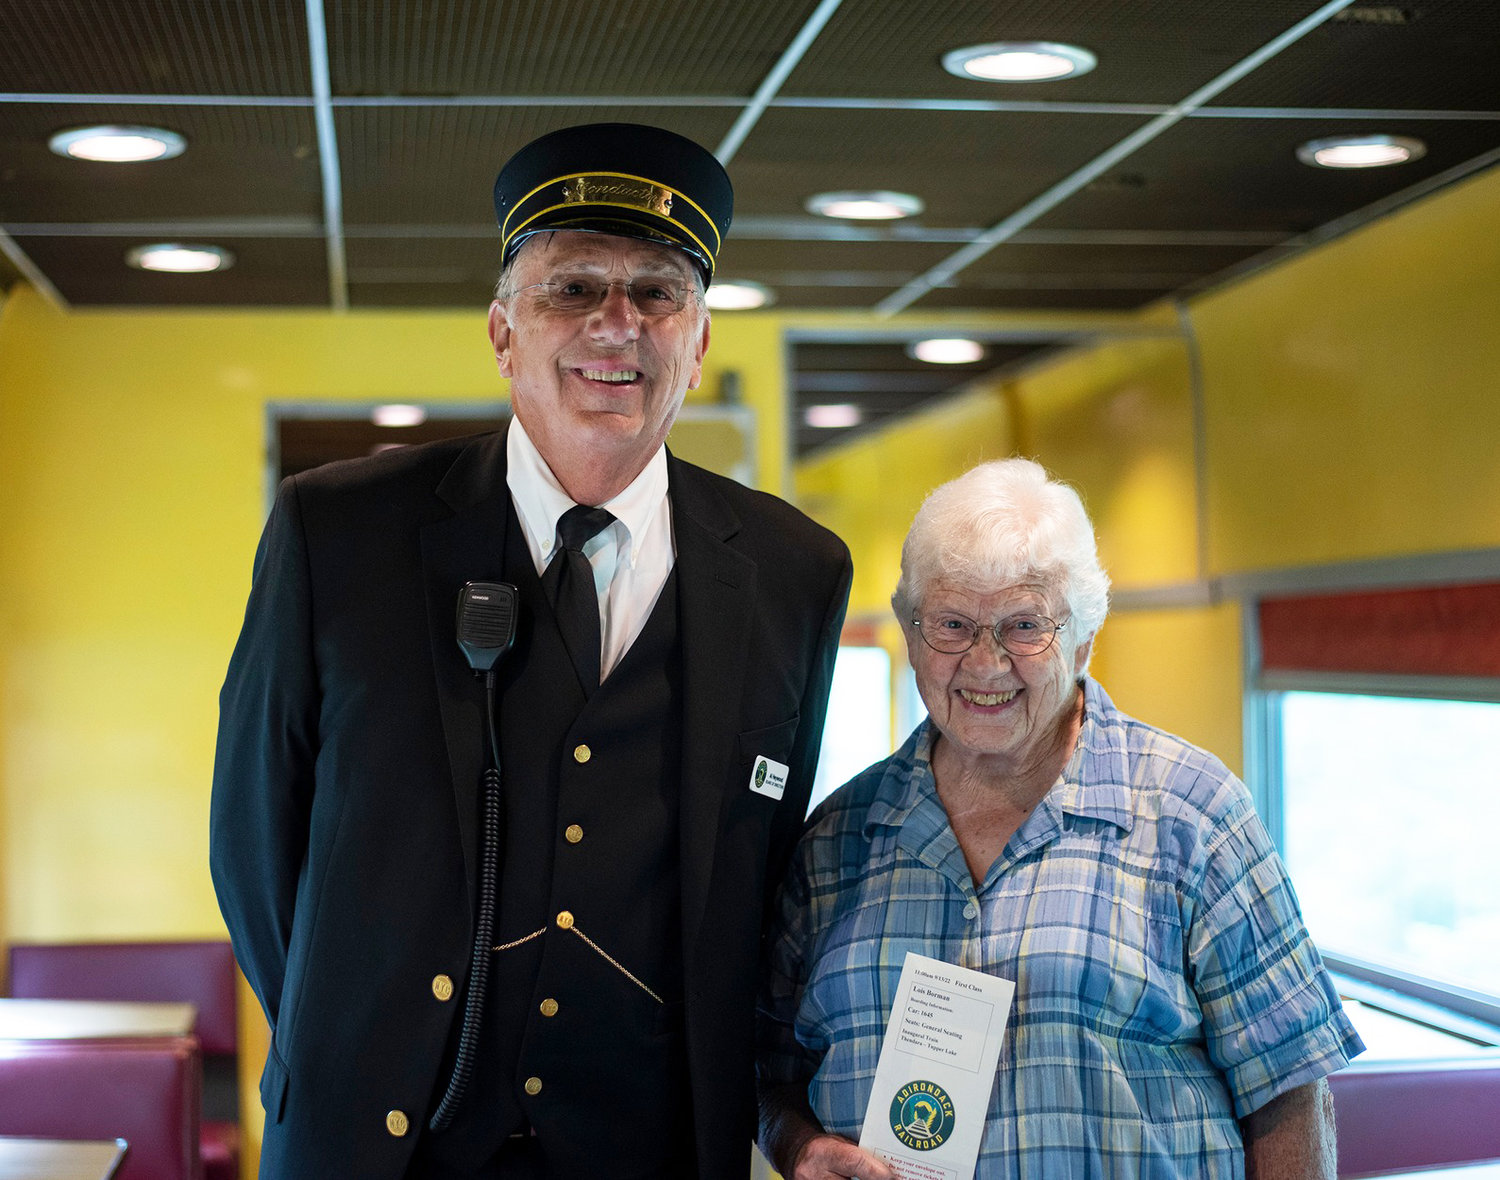 TRAIN CONDUCTOR AND VOLUNTEER - Al Heywood, Adirondack Railway Preservation Society Board member and train conductor, with Lois Borman, a 30-year volunteer.